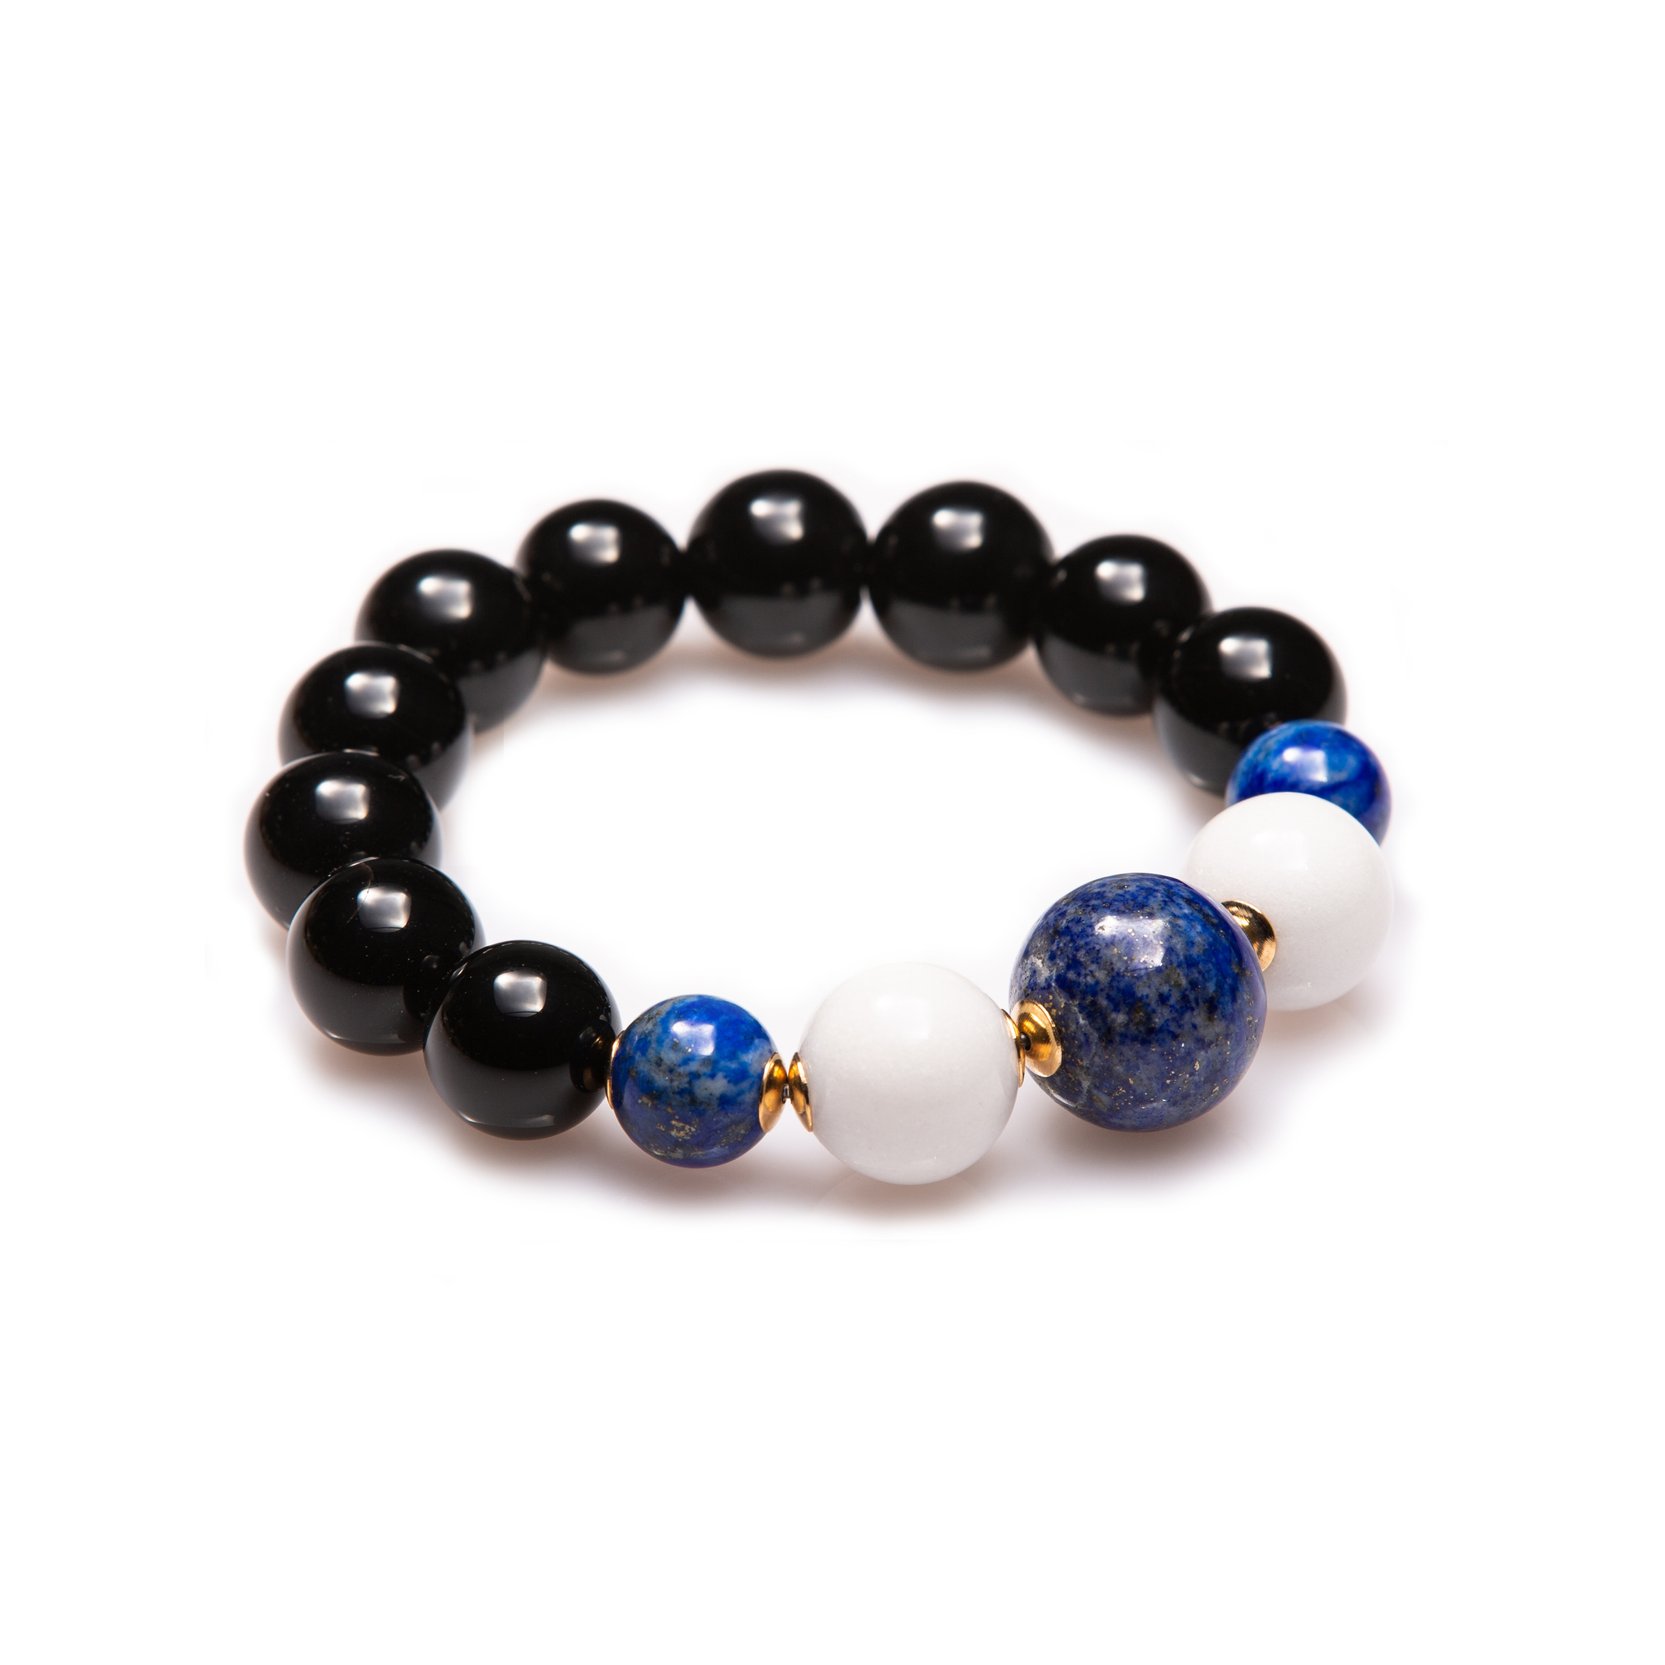 Agate bracelet with lapis lazuli